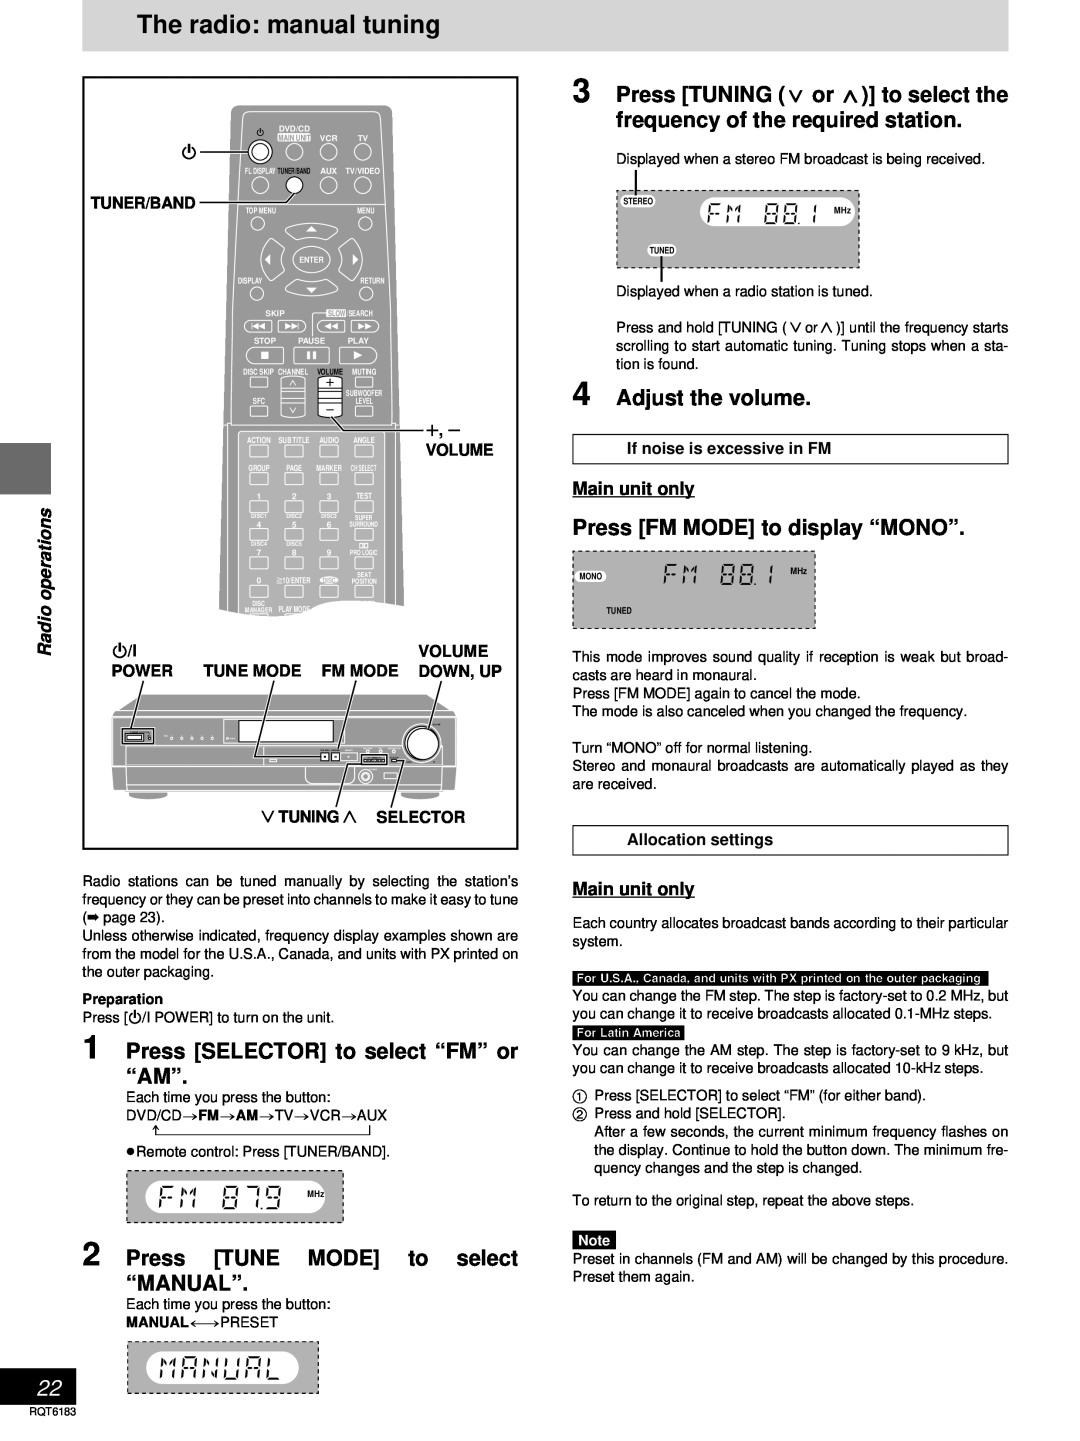 Panasonic SC-HT95 The radio manual tuning, Adjust the volume, Press FM MODE to display “MONO”, Radio, Tuner/Band, r, s 